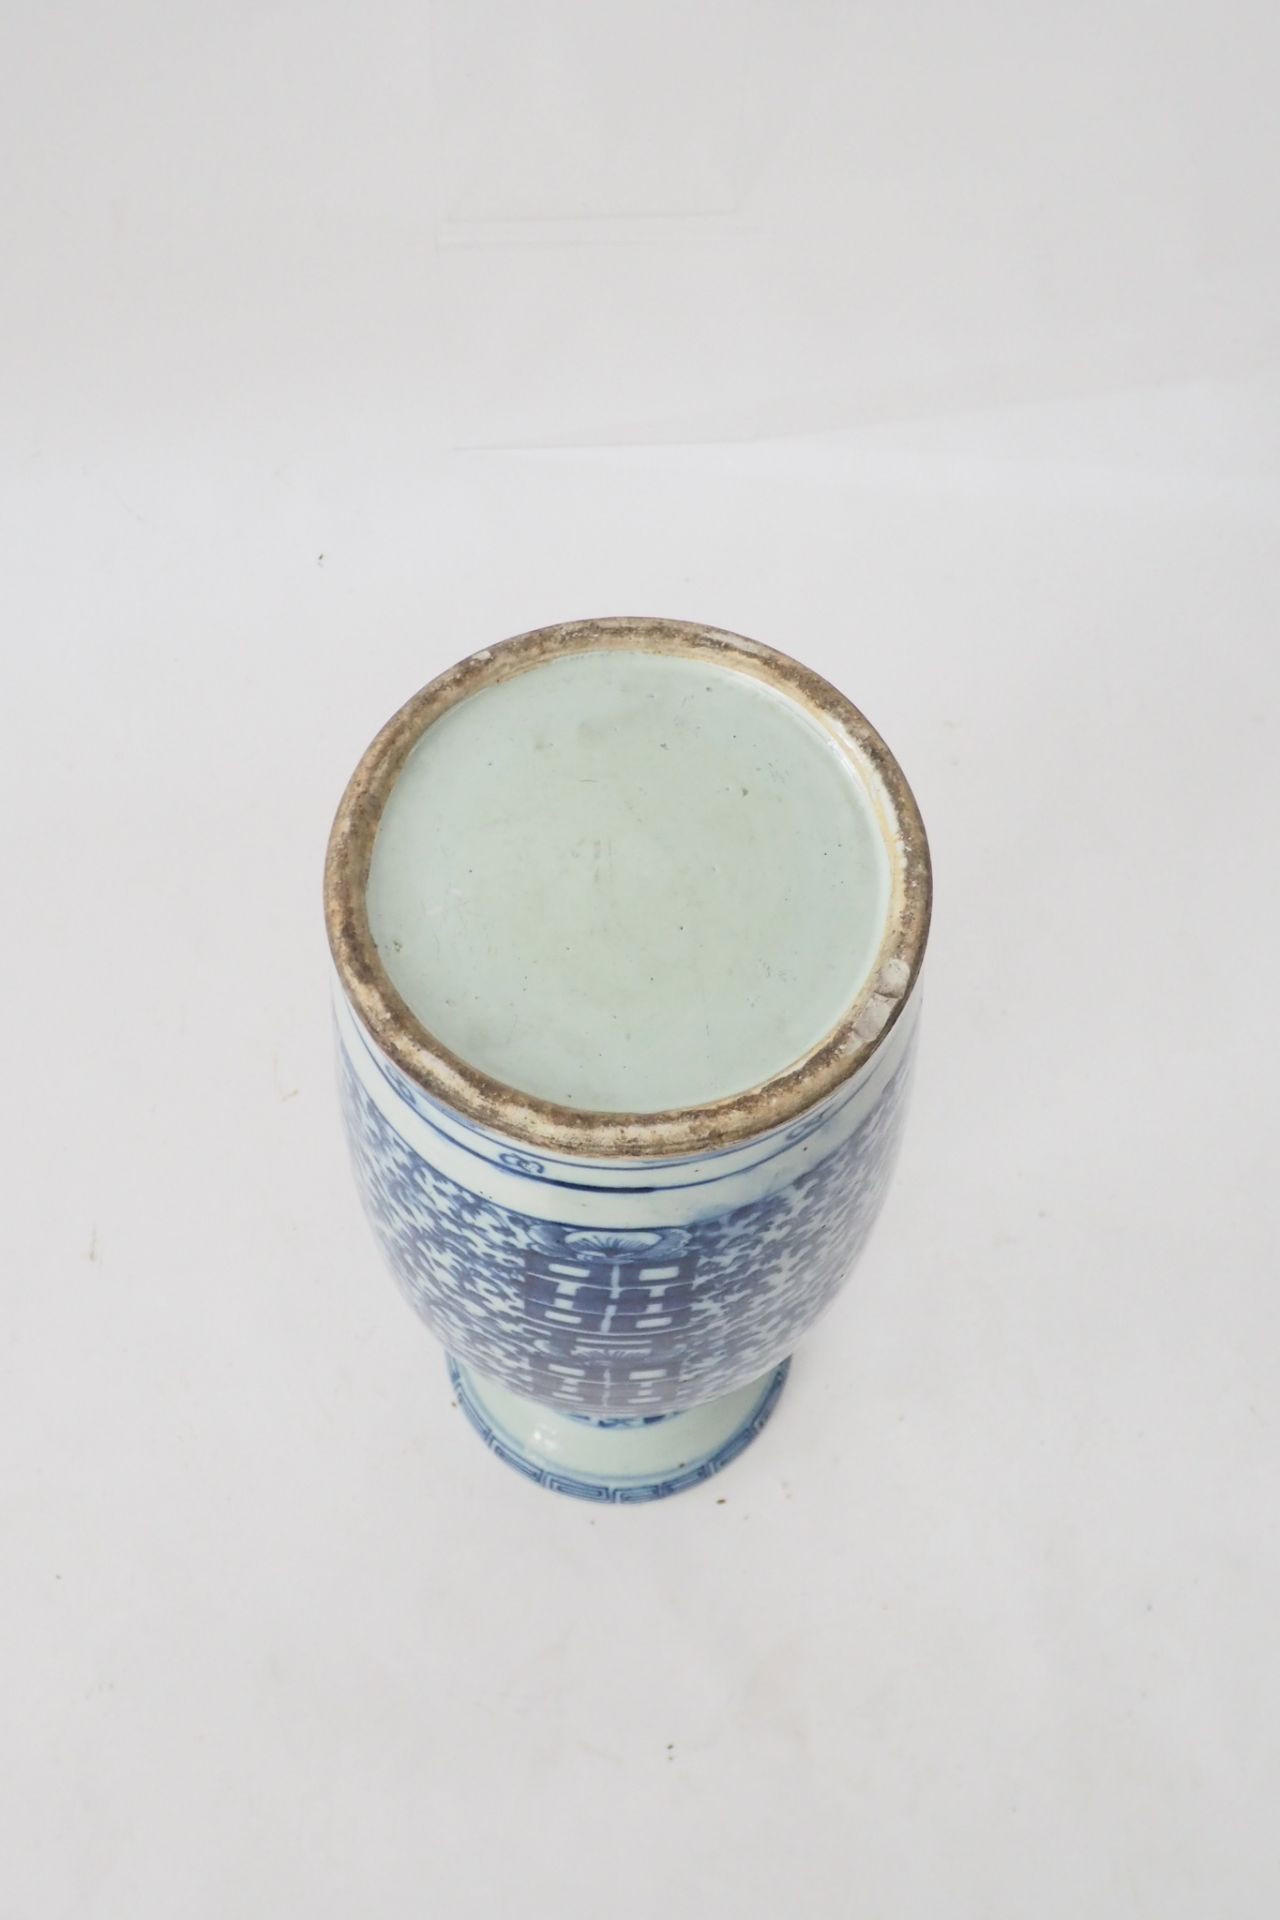 Blau-weiße China Porzellan Bodenvase - Image 6 of 7